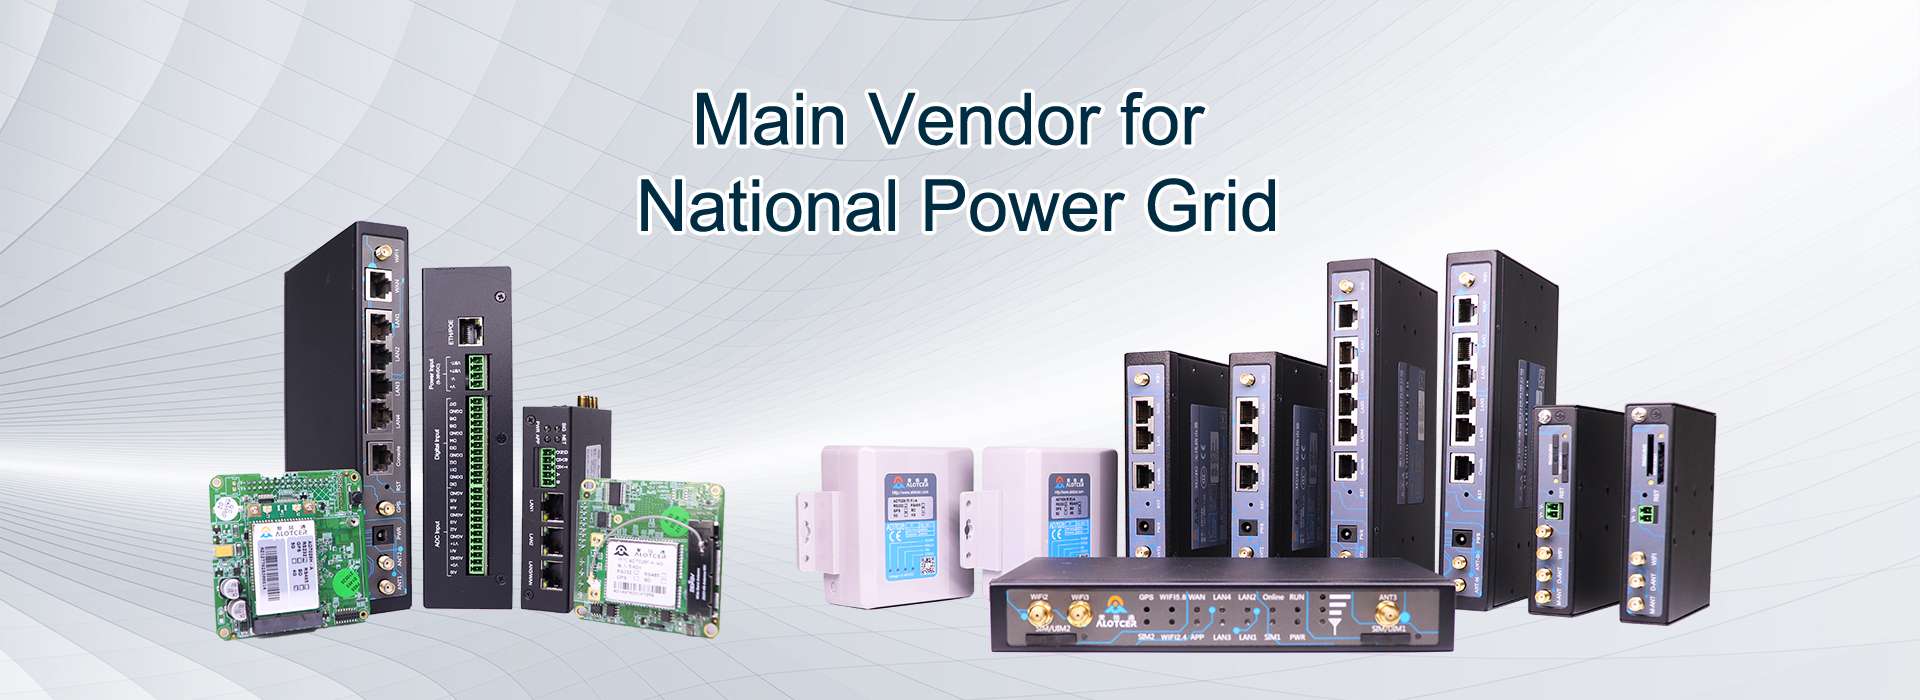 Principal proveedor de National Power Grid